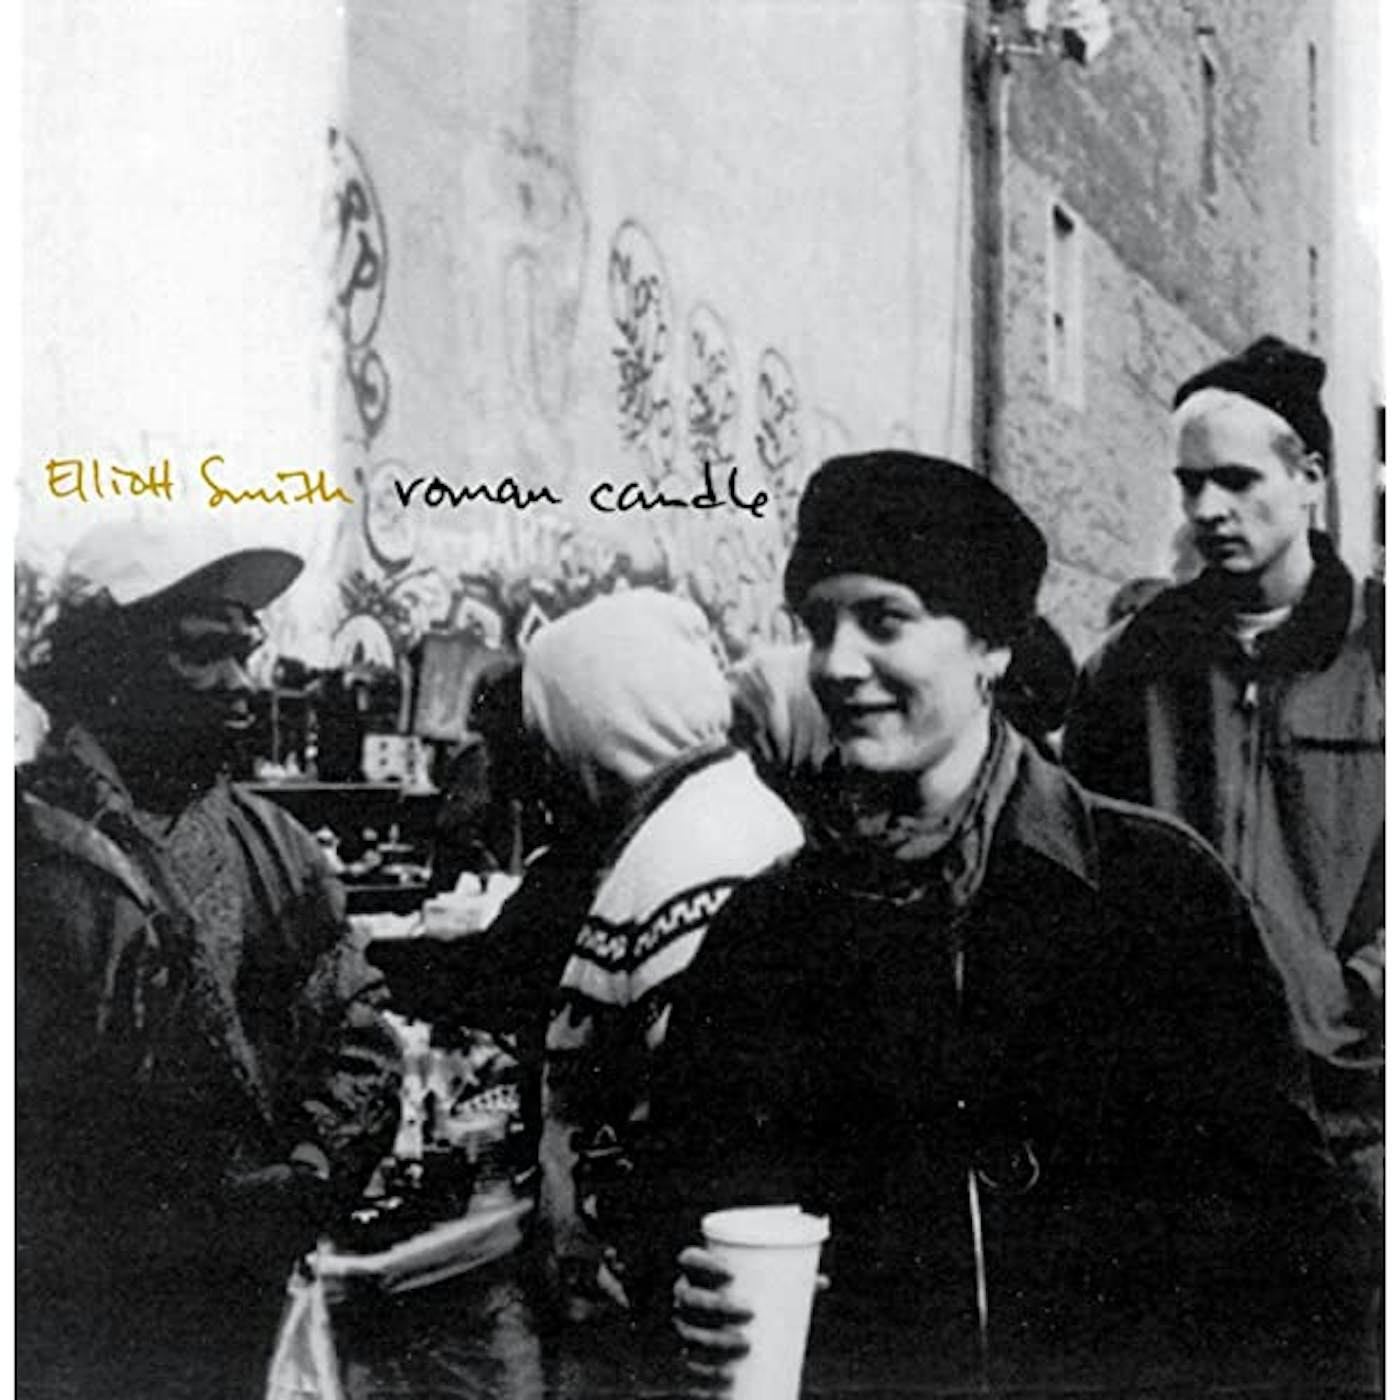 Elliott Smith ROMAN CANDLE (DL CARD) Vinyl Record